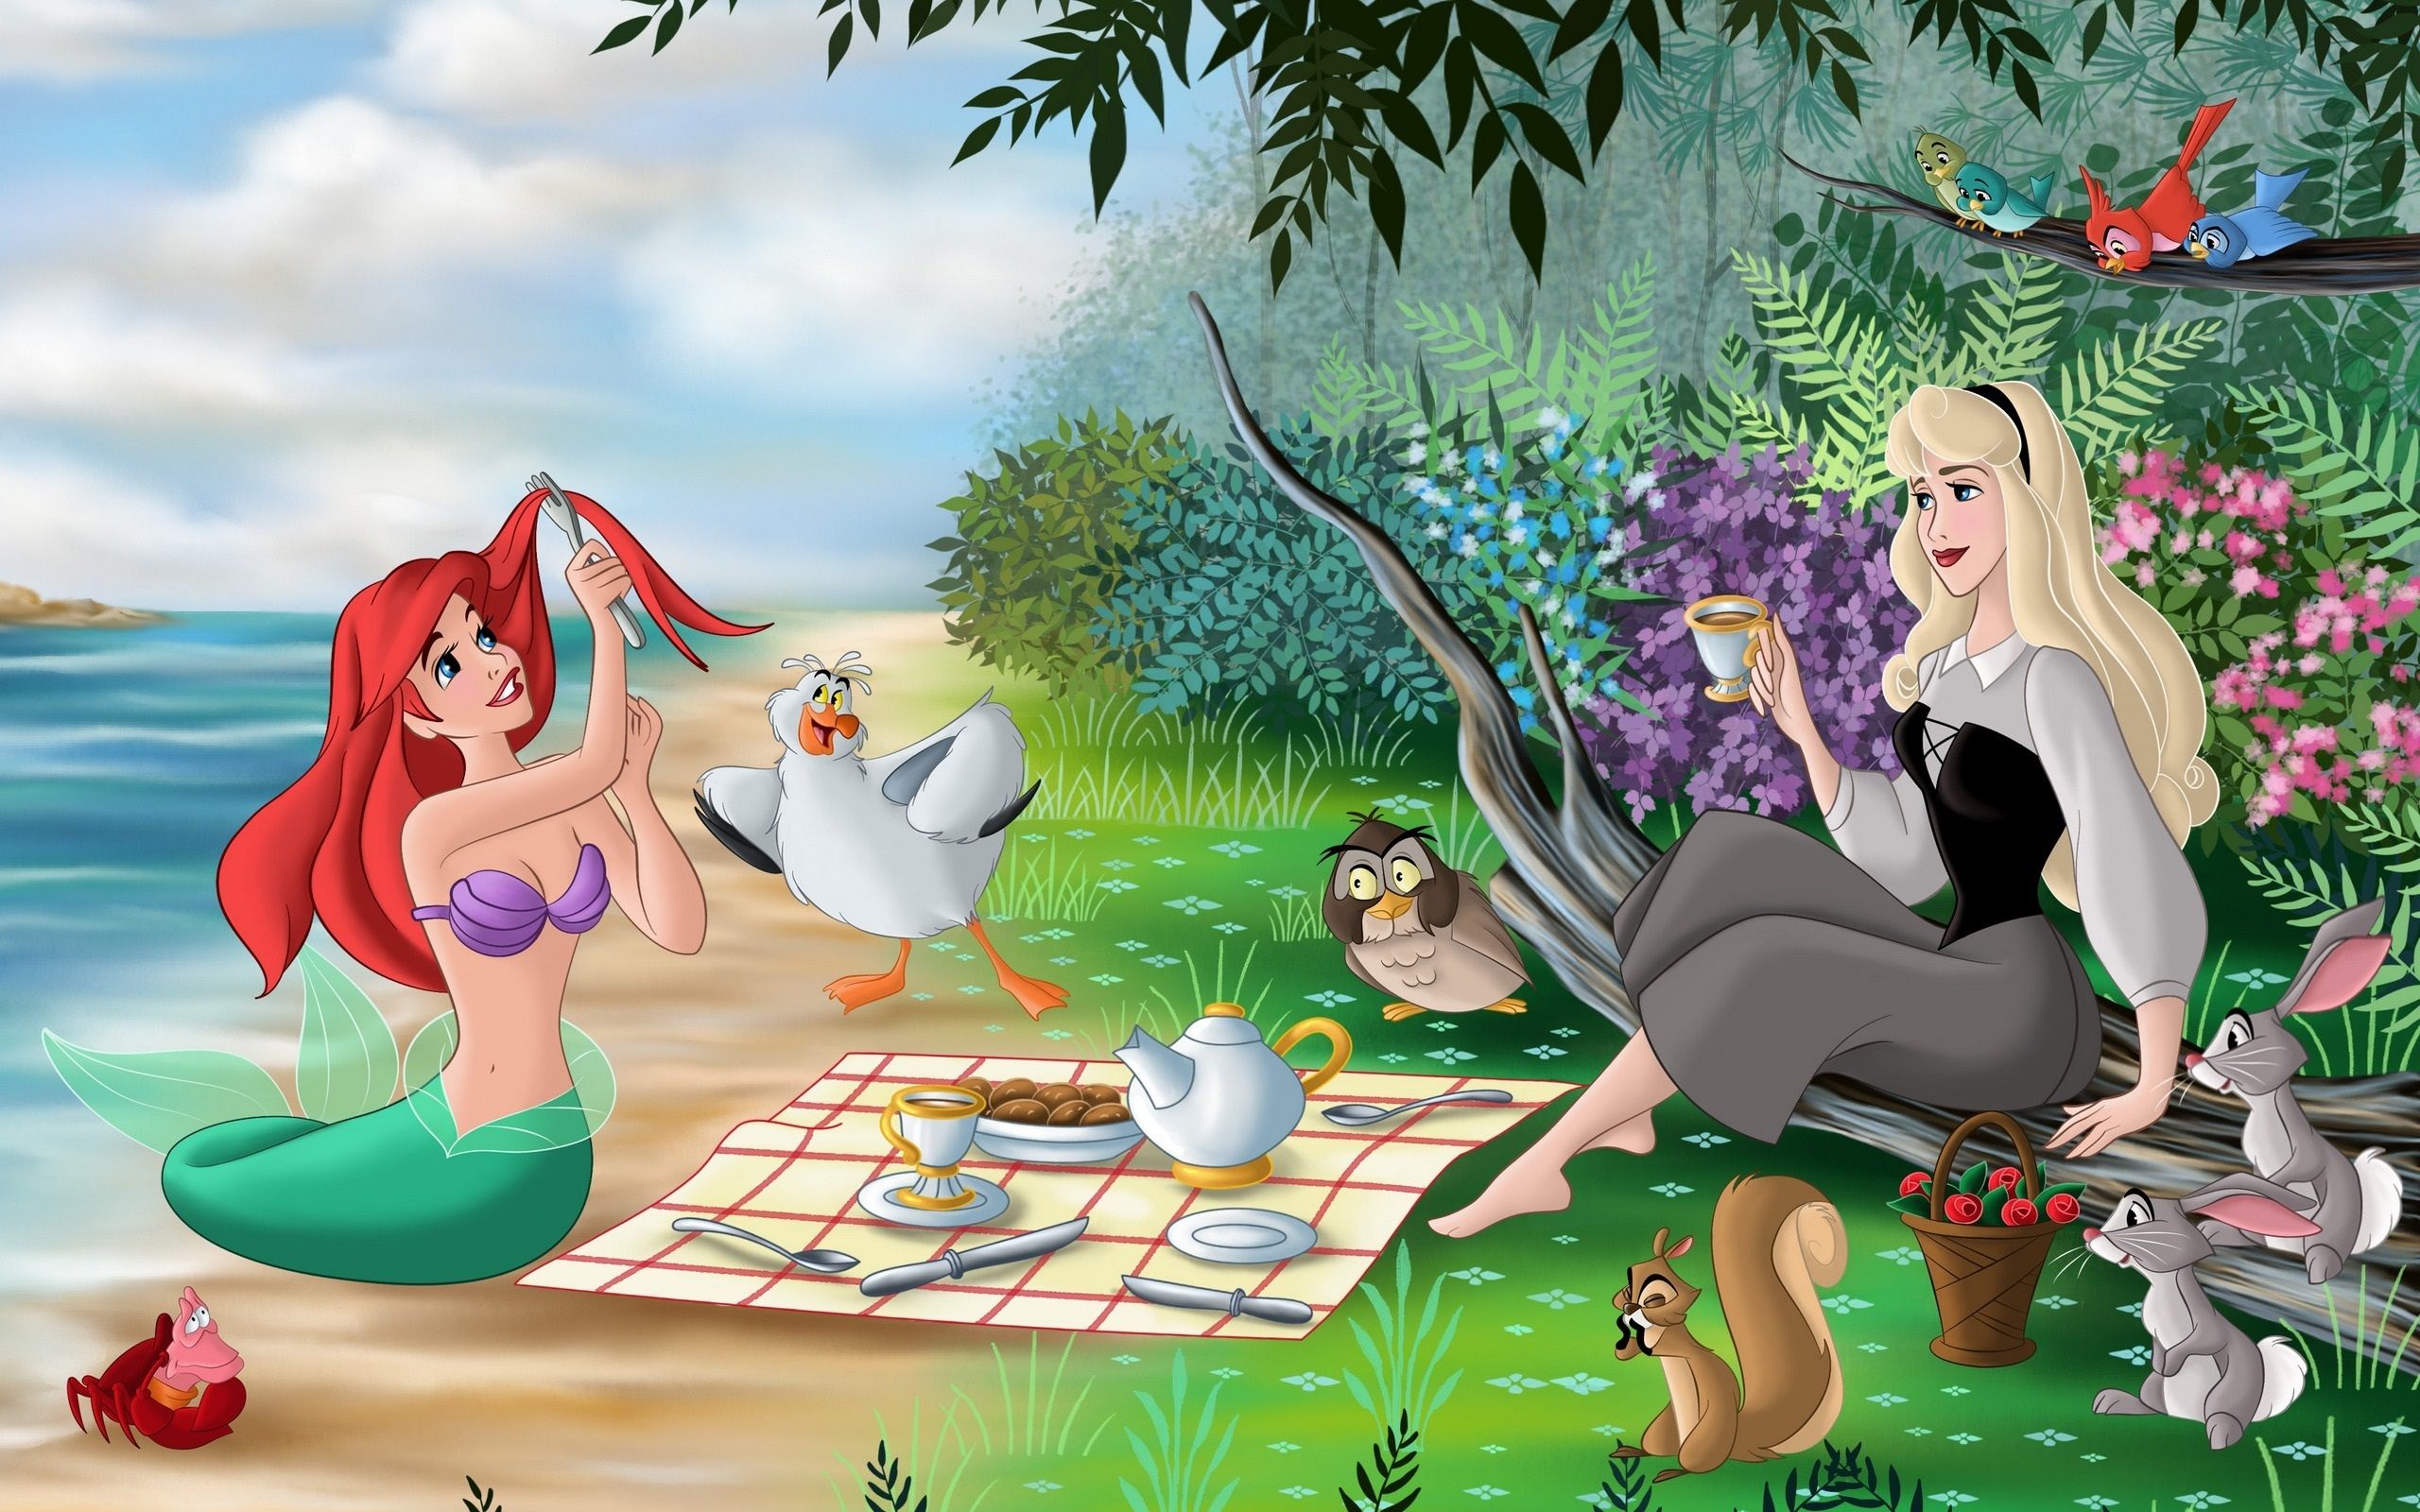 2560x1600 Wallpaper The Little Mermaid and Sleeping Beauty, Disney animated...